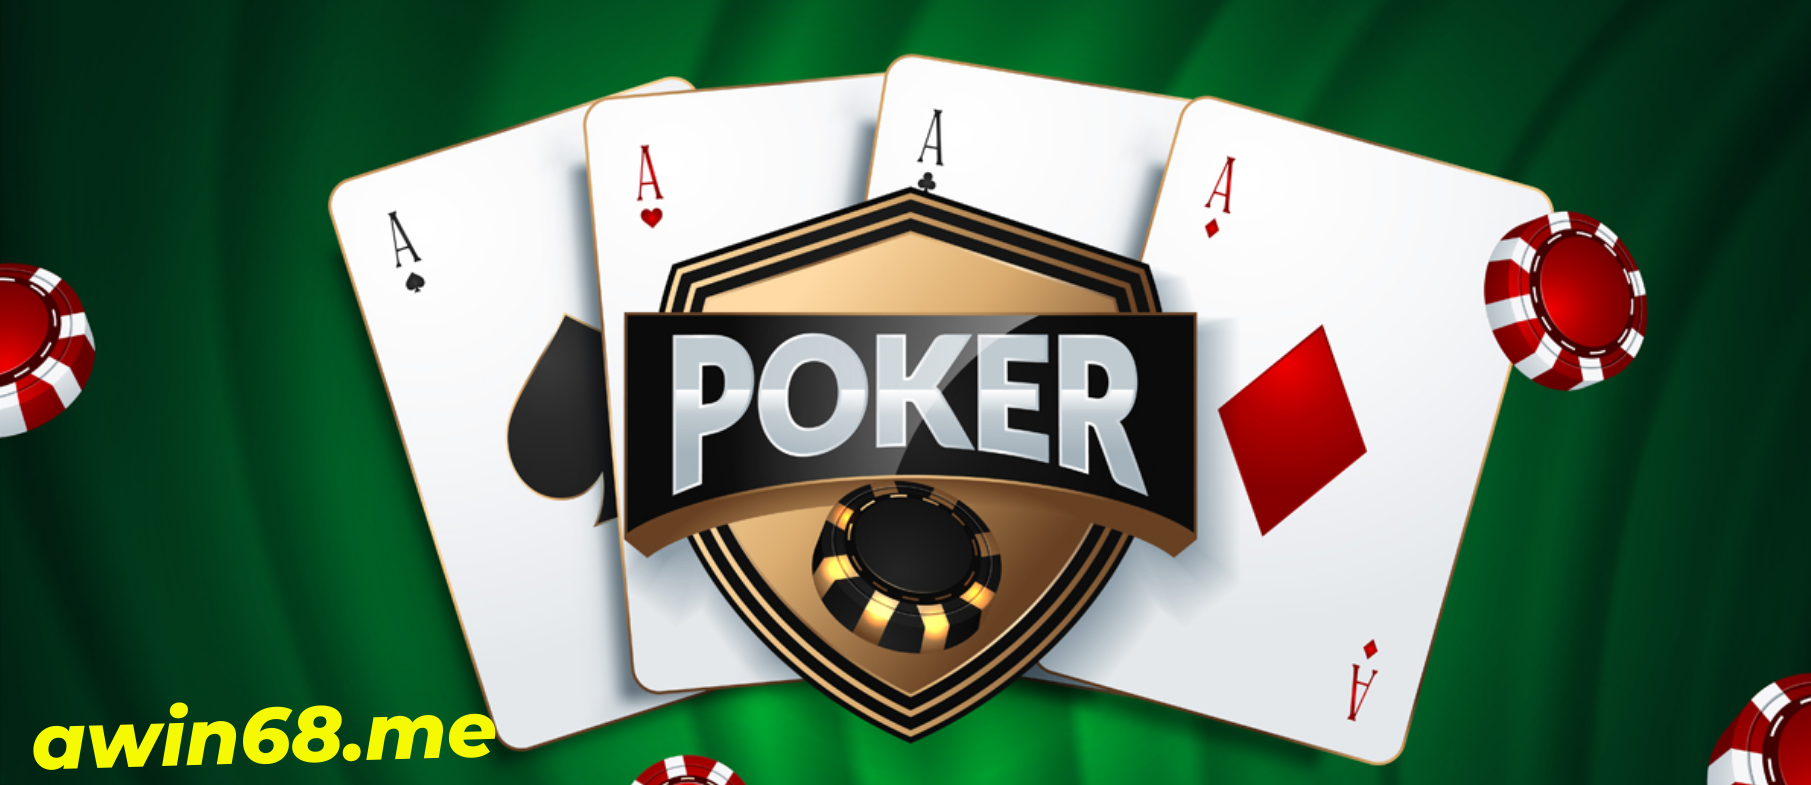 Game bài Poker awin68